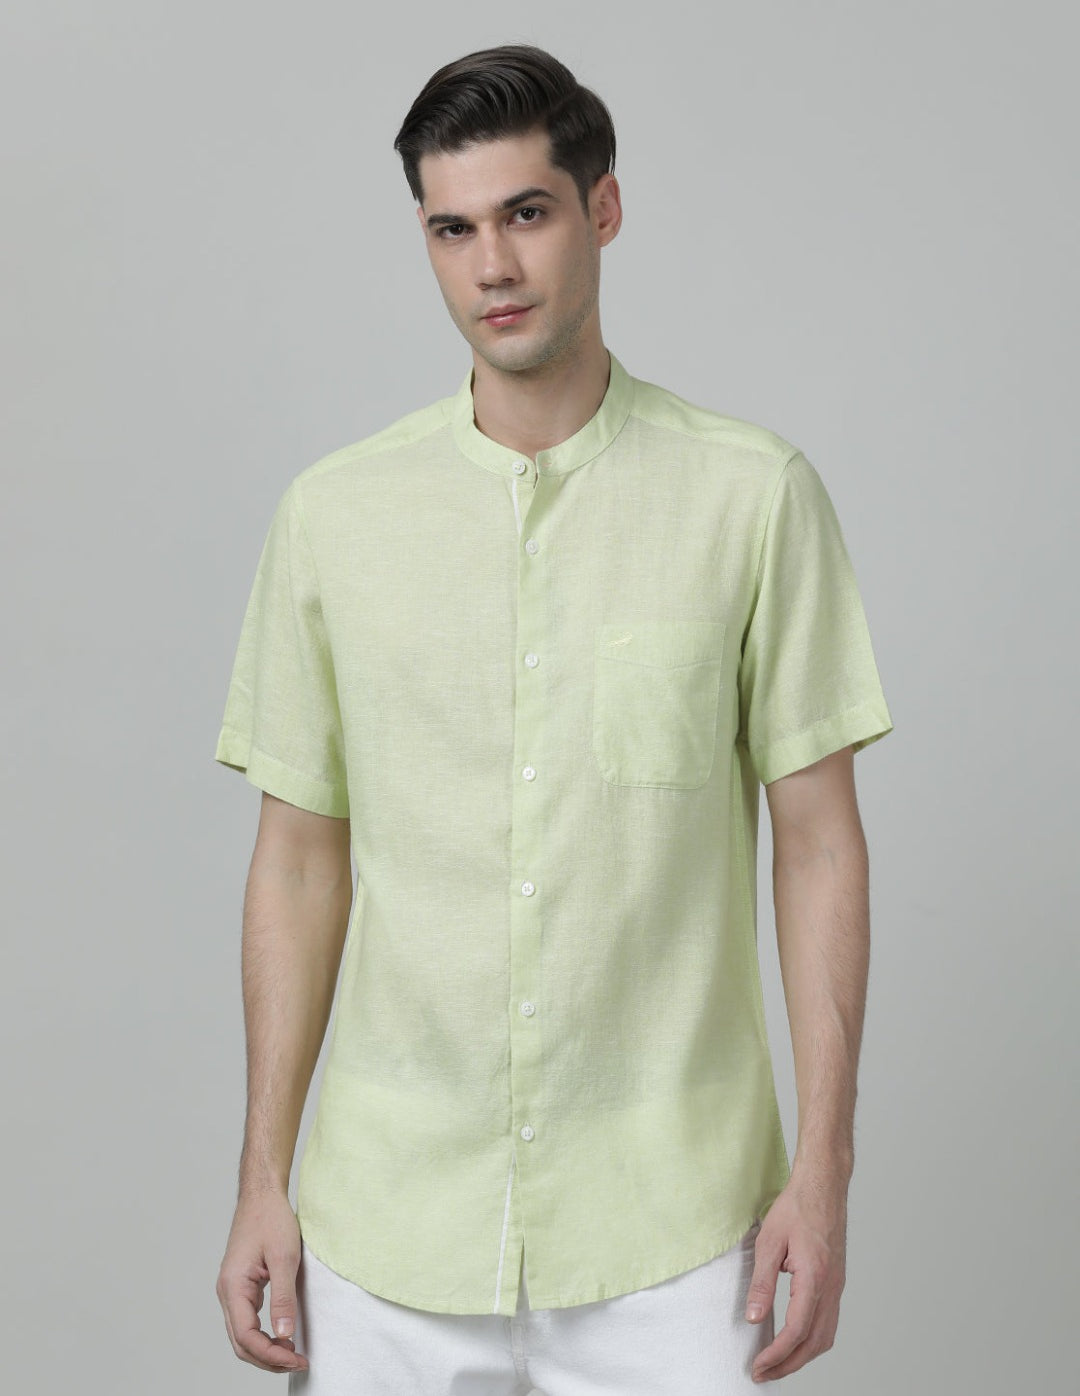 Crocodile Men's Half Sleeve Shirt